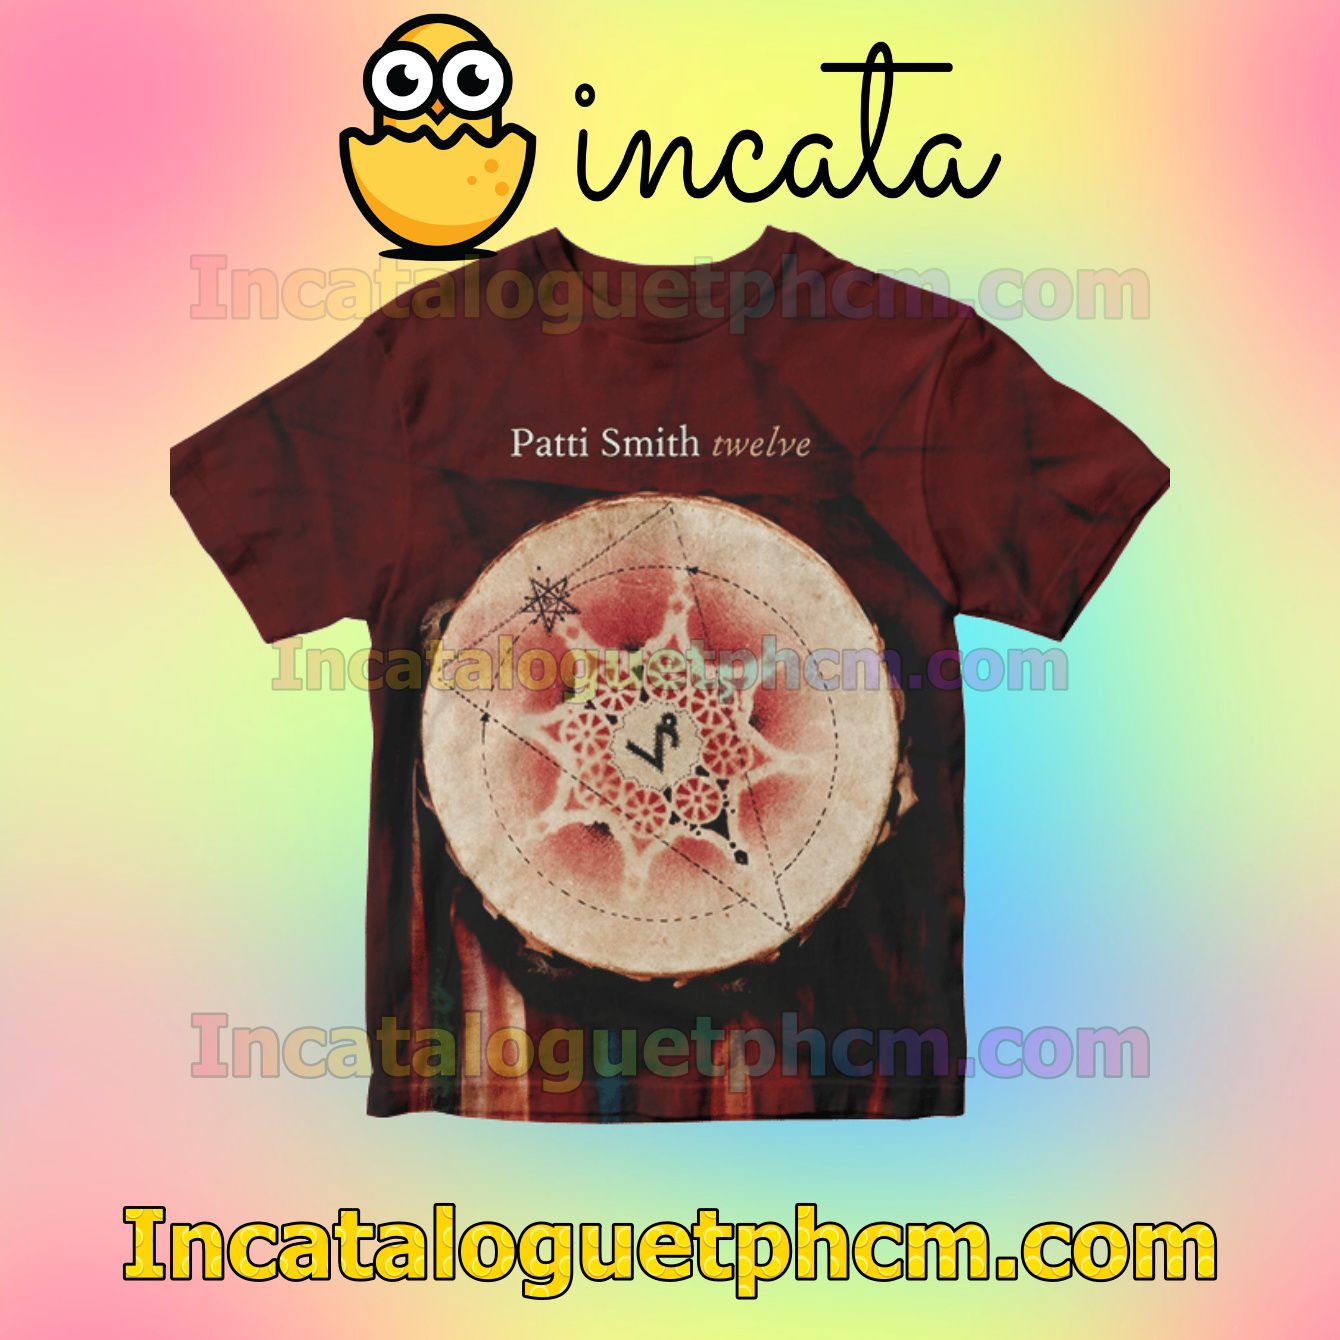 Patti Smith Twelve Album Cover Personalized Shirt